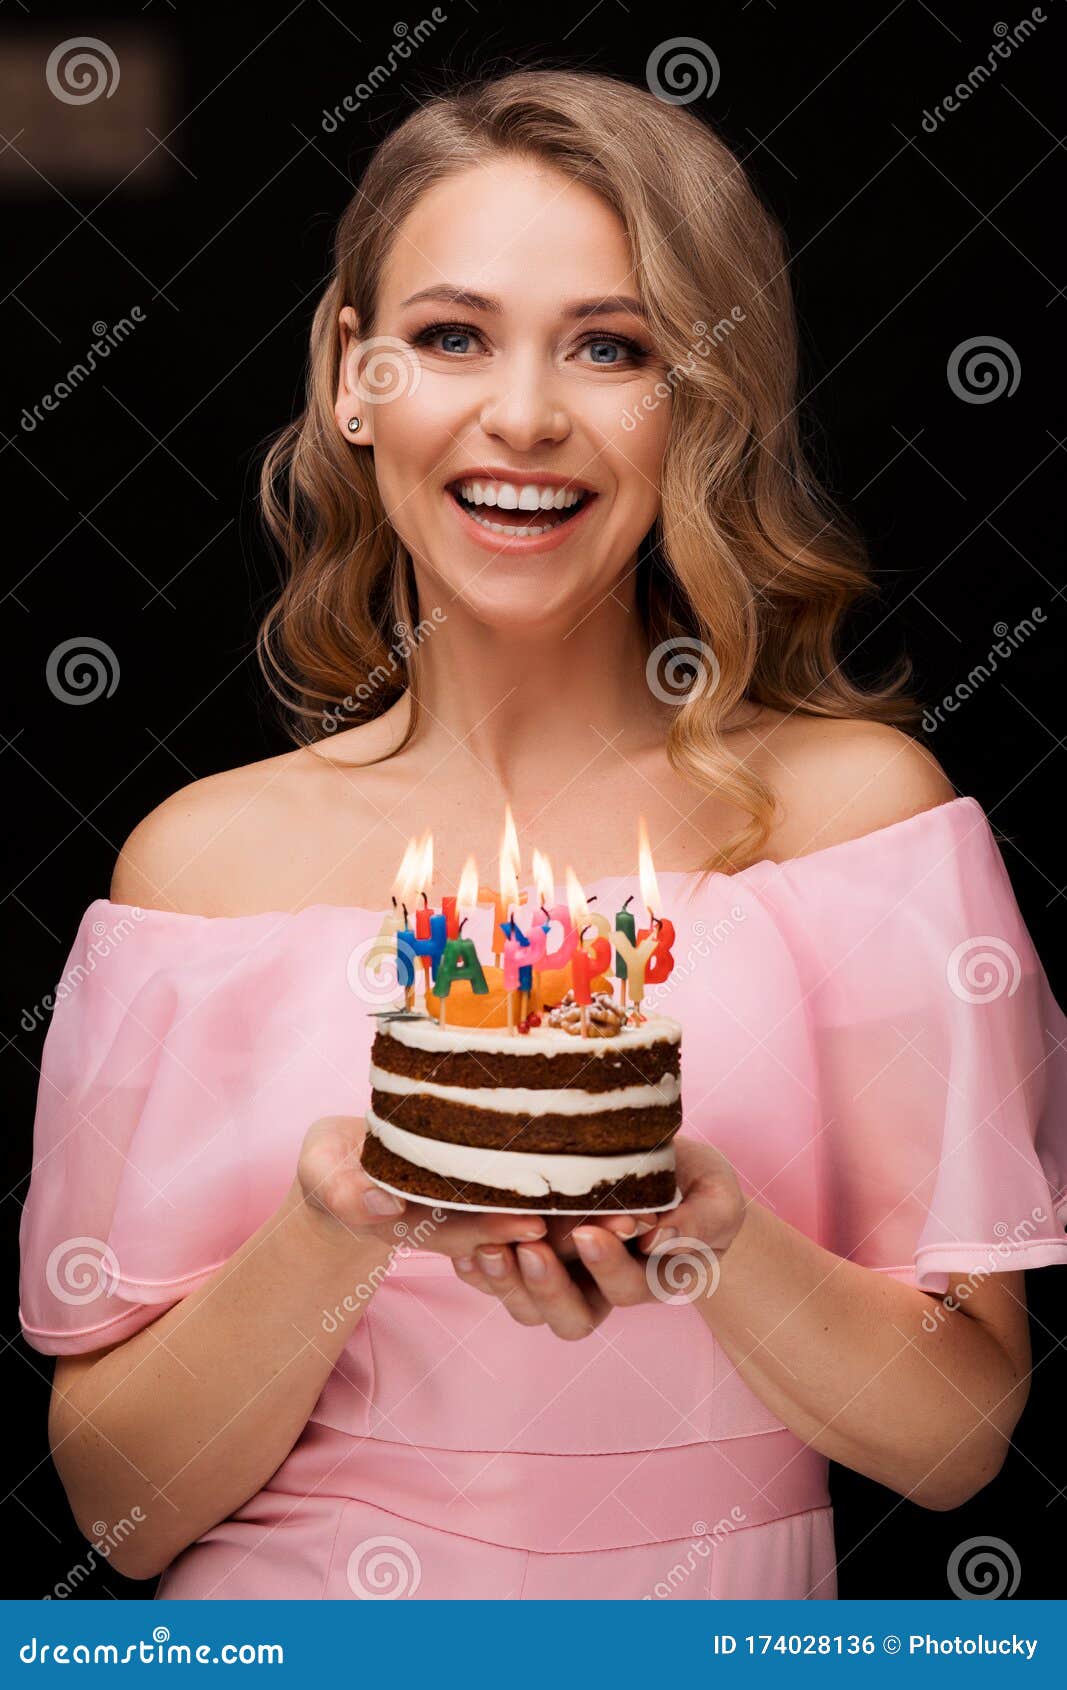 Birthday photoshoot ideas for girls | pose with cake |❤️ - YouTube-demhanvico.com.vn